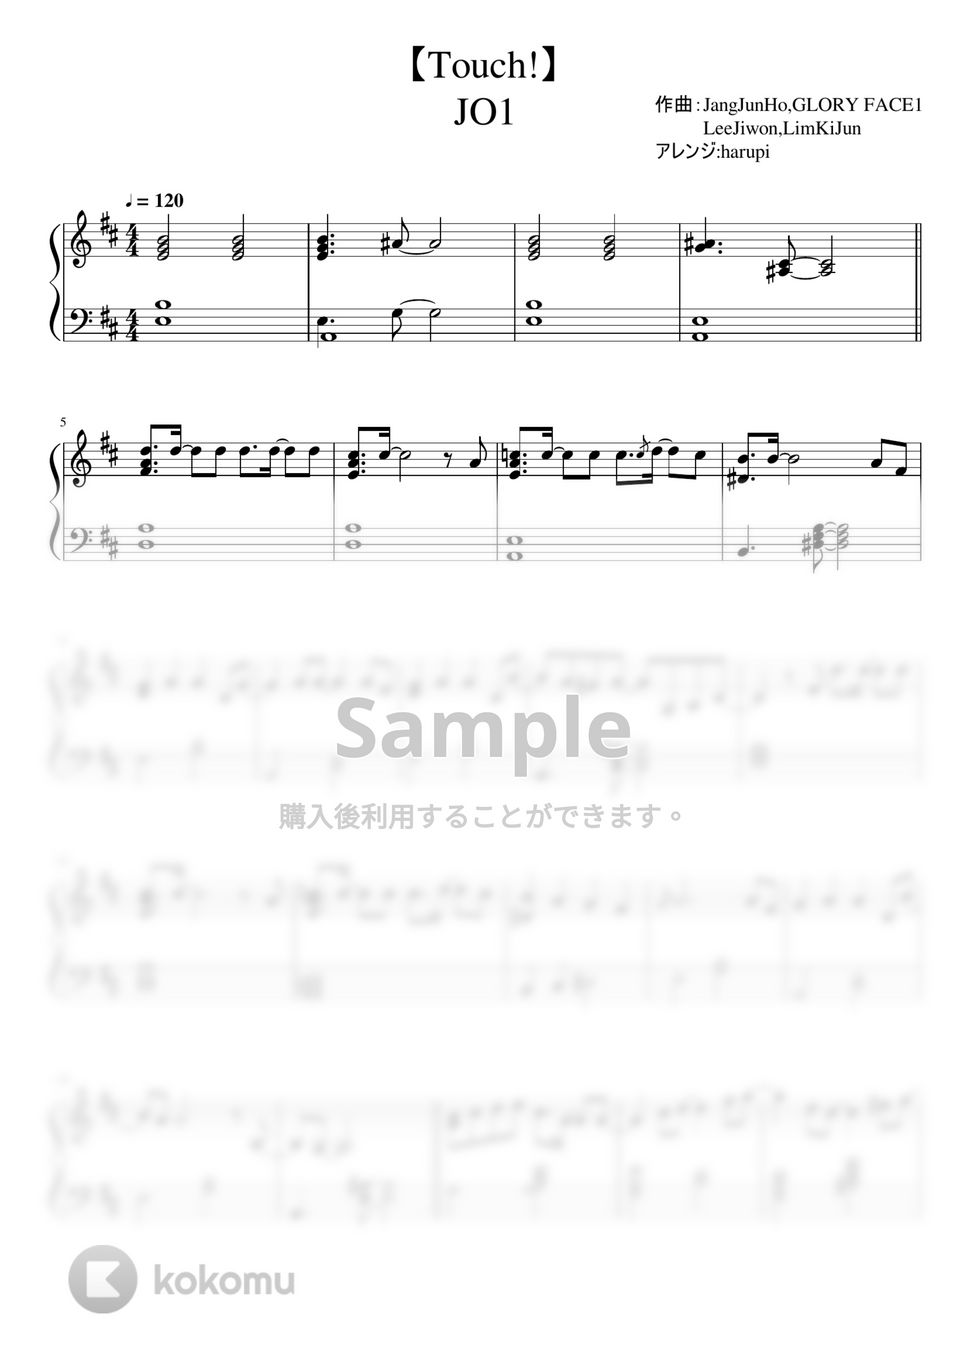 JO1 - Touch! (ピアノソロ) by harupi